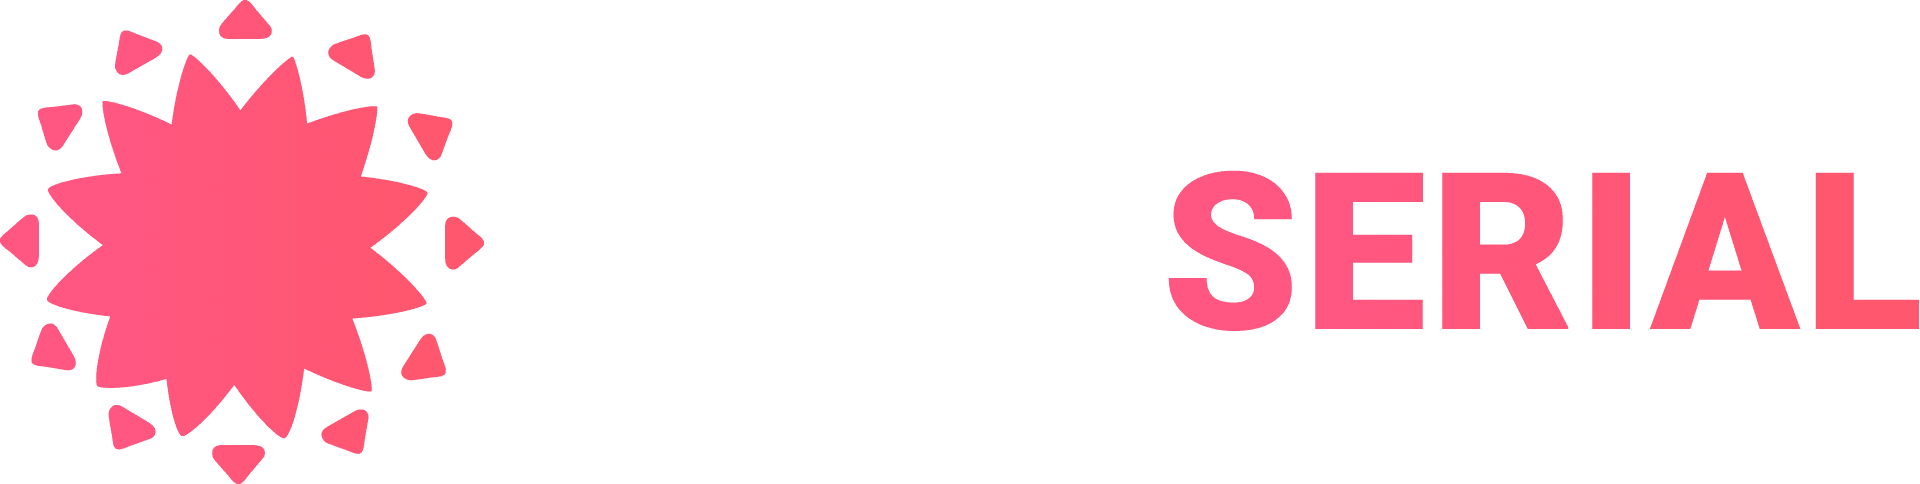 Turkish Serials логотип. Turkserial biz